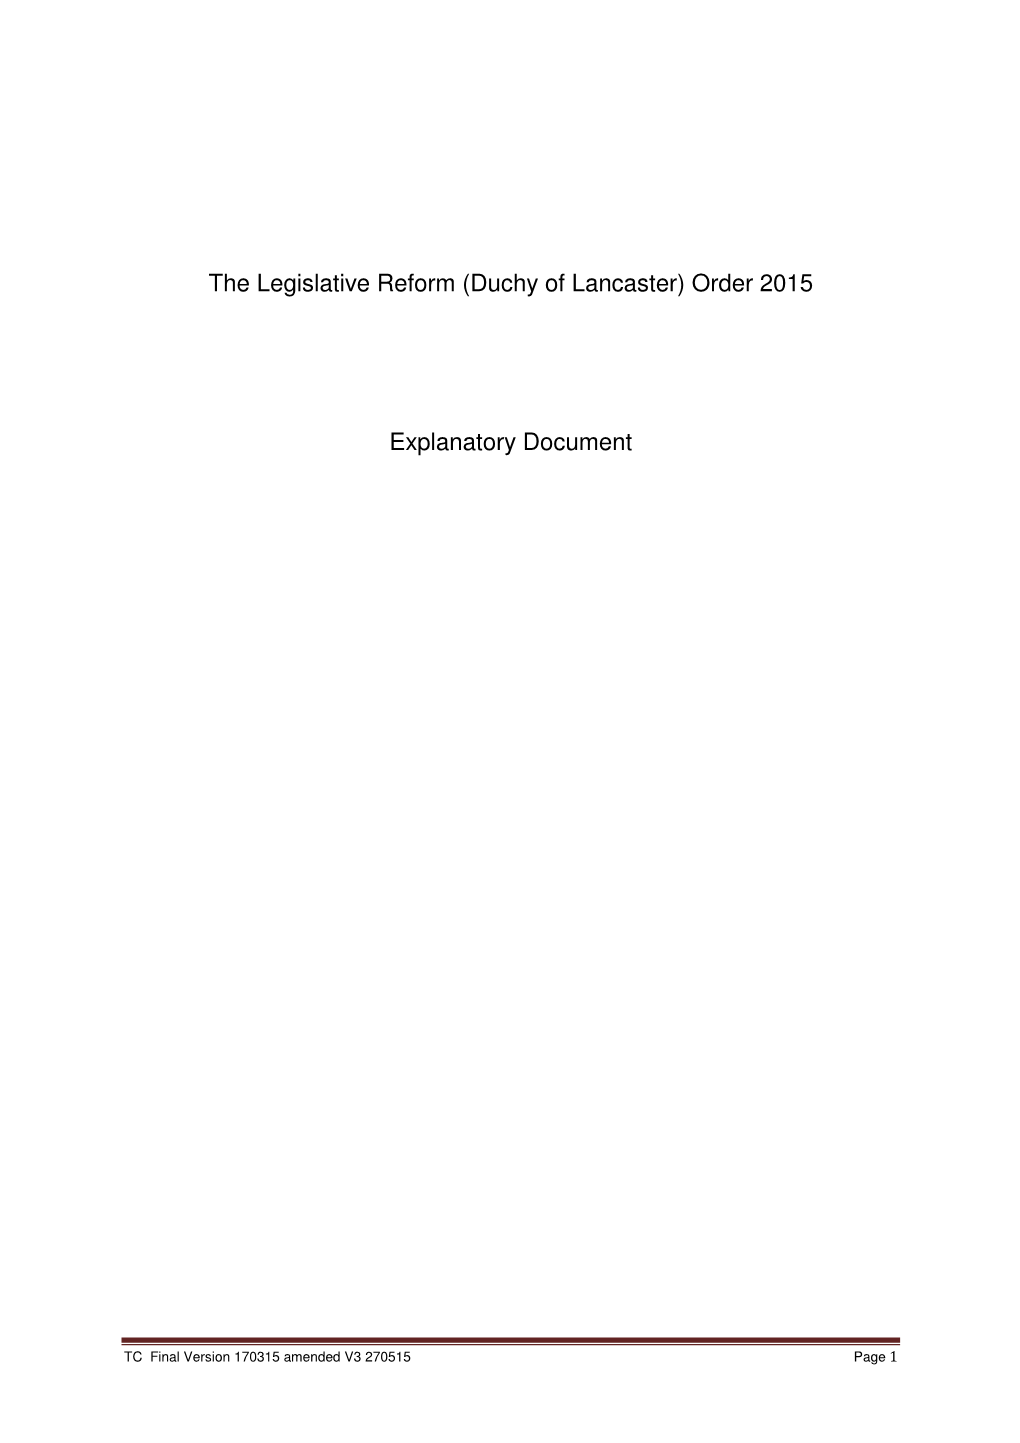 Duchy of Lancaster) Order 2015